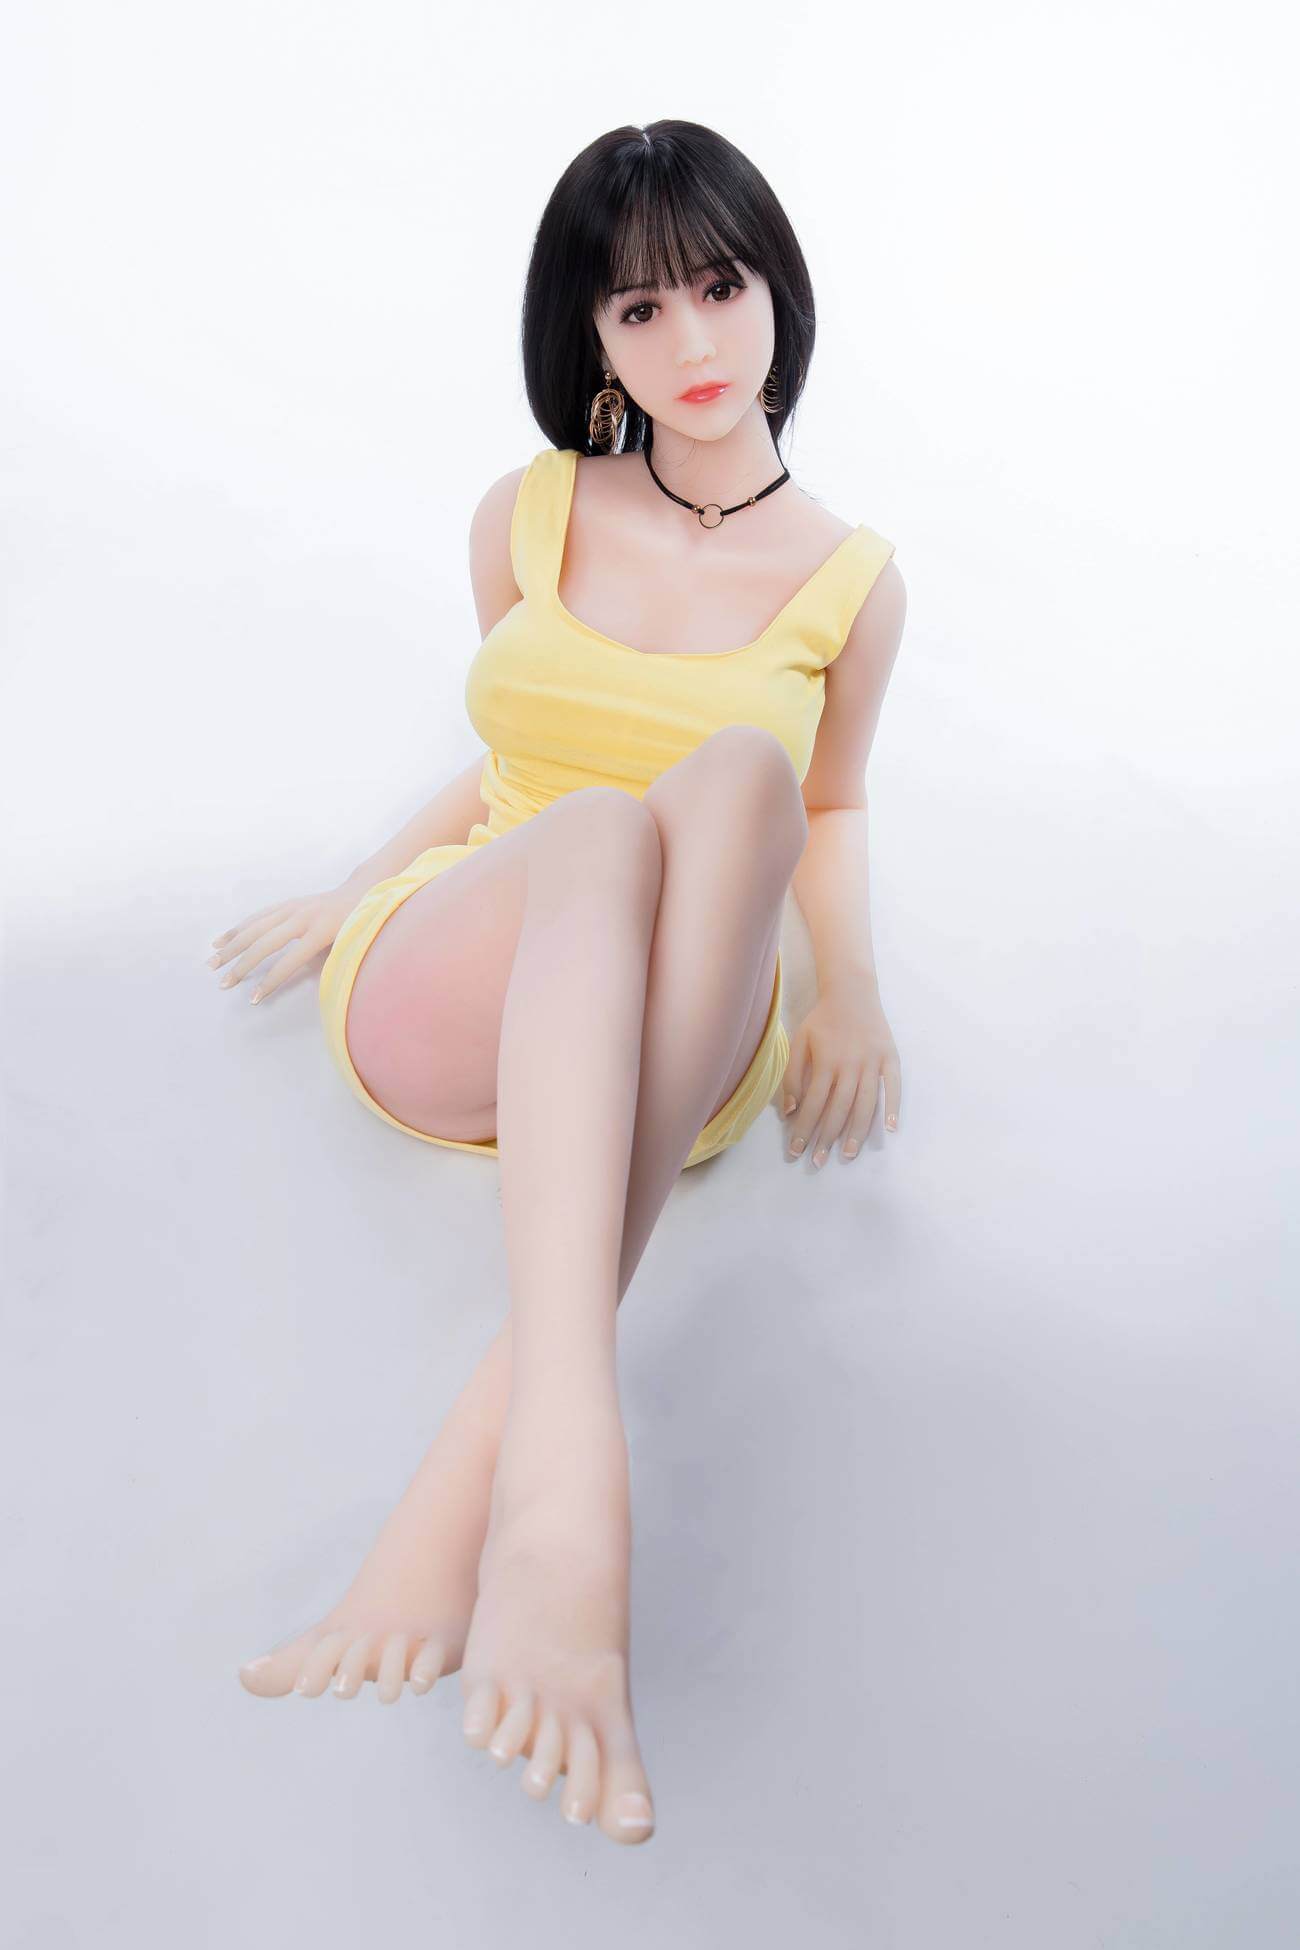 Japanese Life Size Sex Dolls   Lee 14